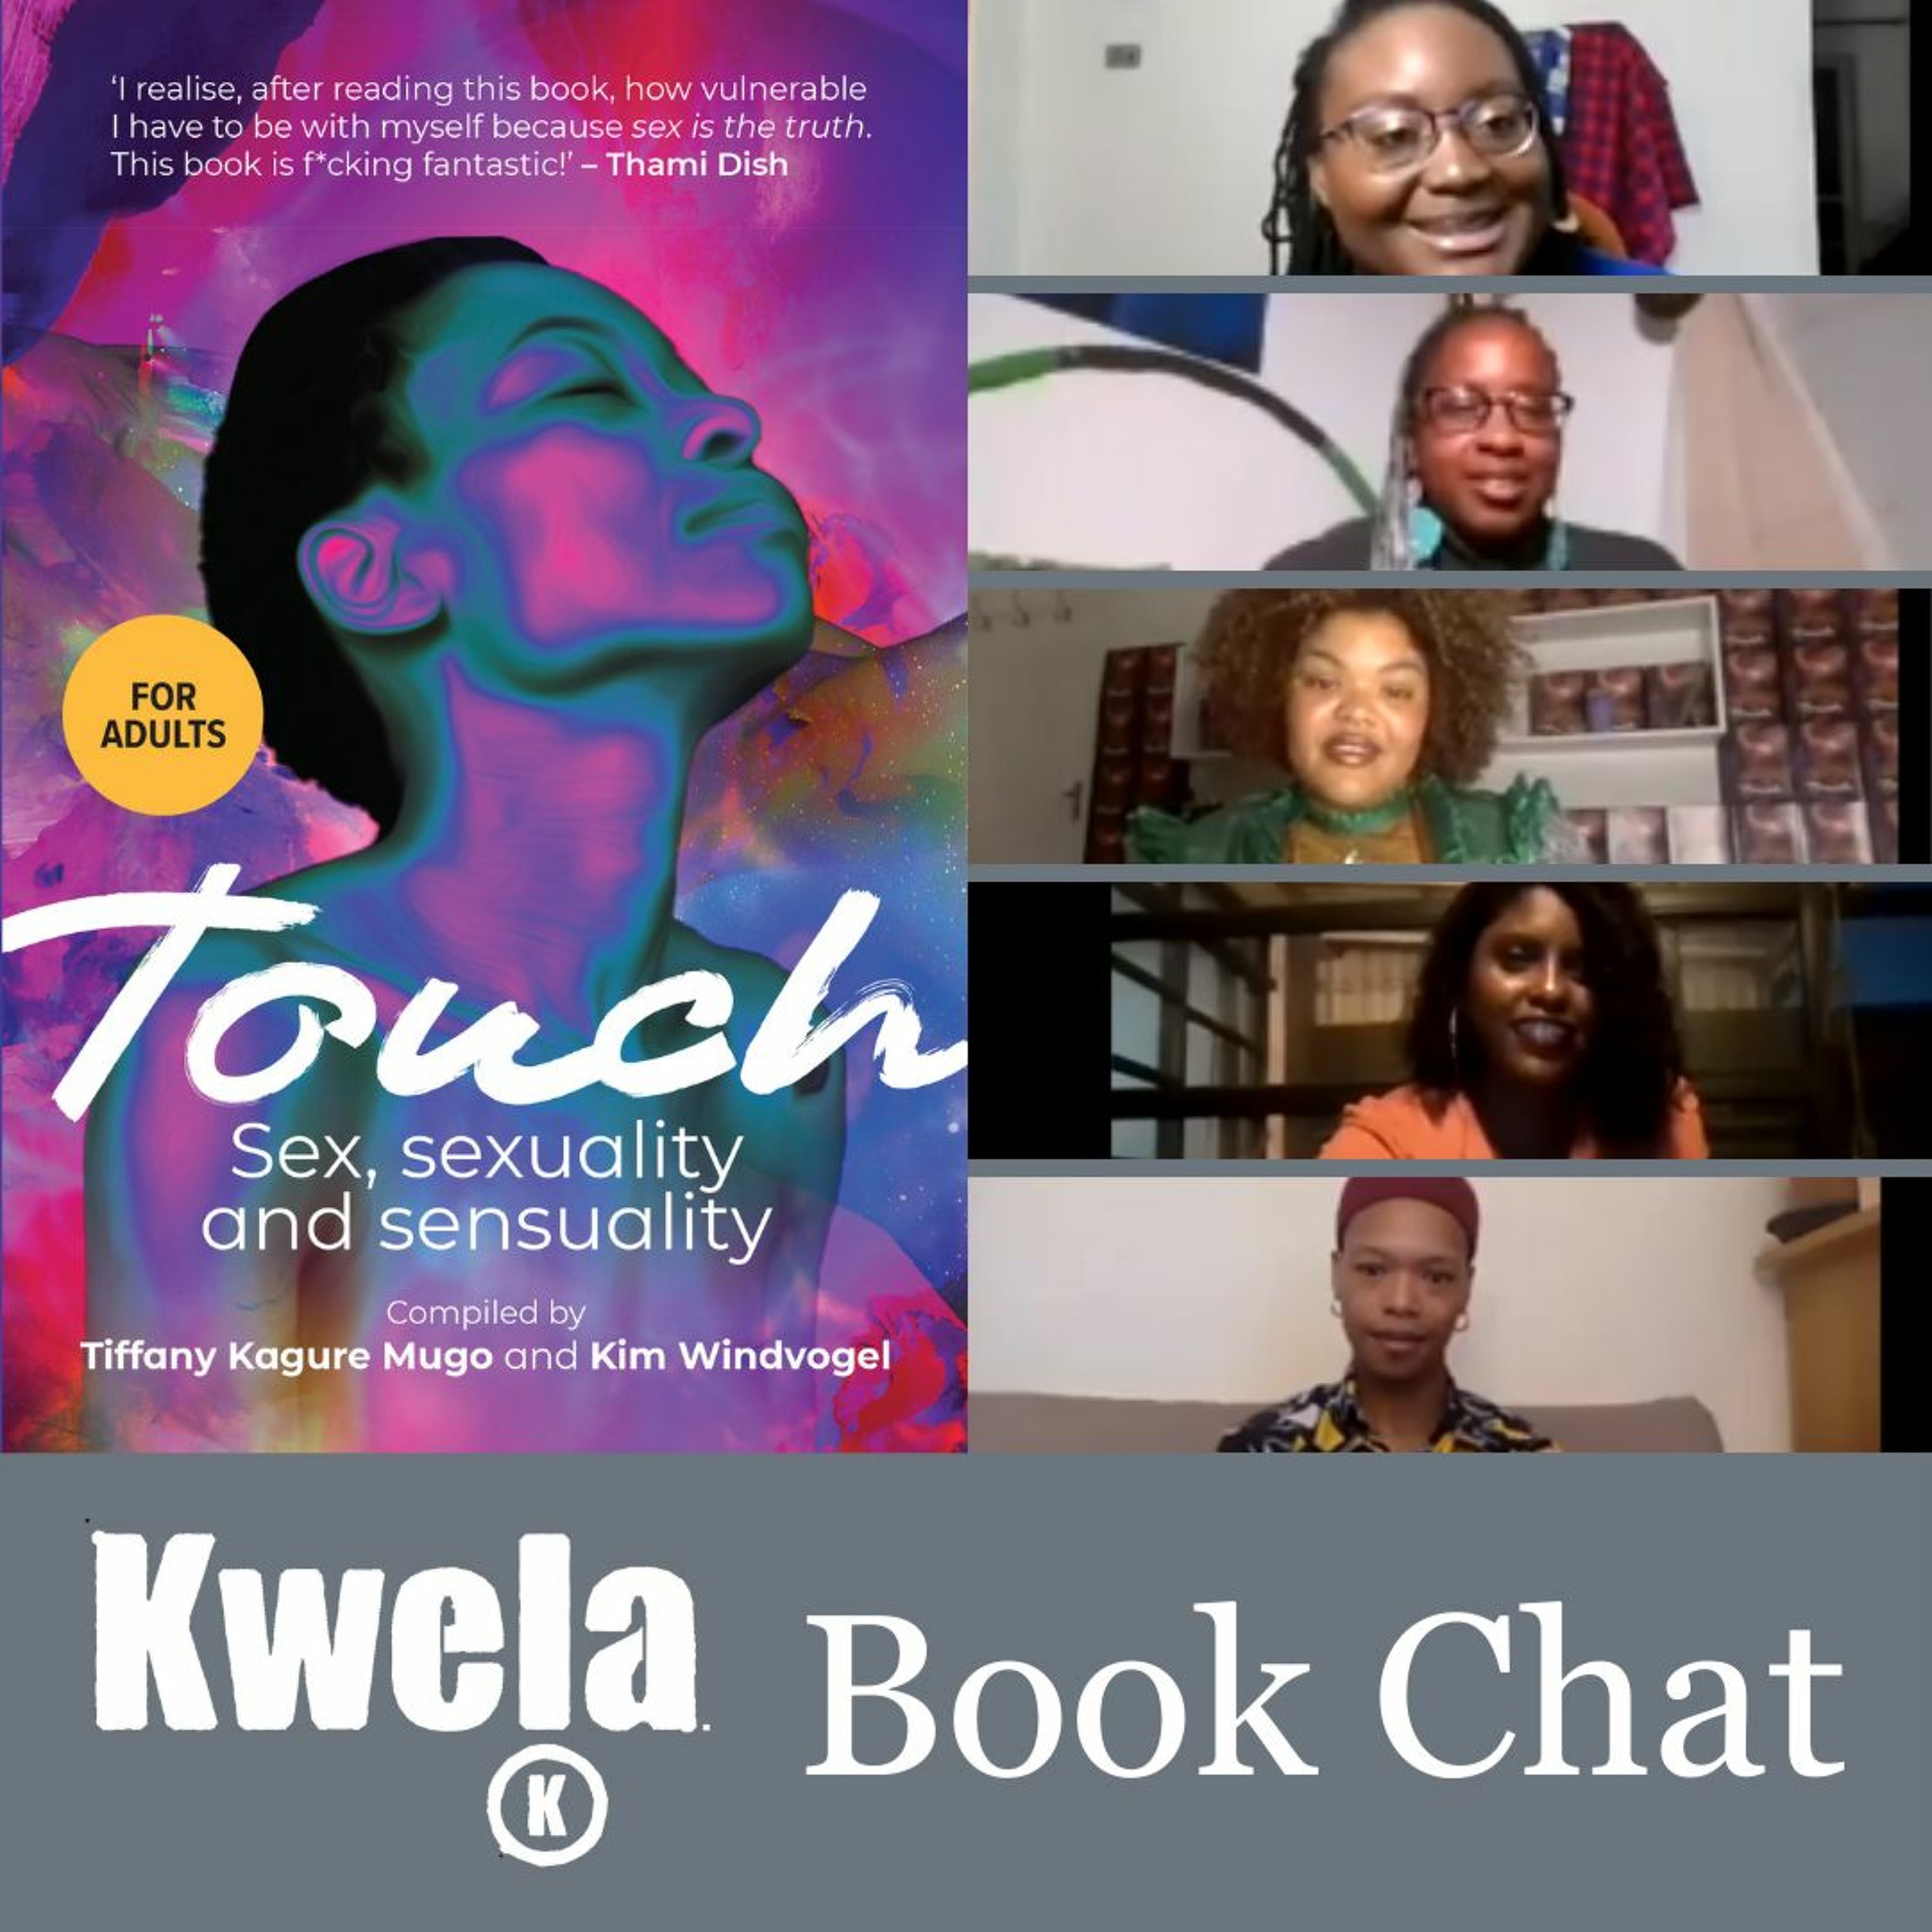 Kwela Book Chat: Touch with Kim Windvogel, Tiffany Kagure Mugo, Nakhane, Roché Kester & Efemia Chela